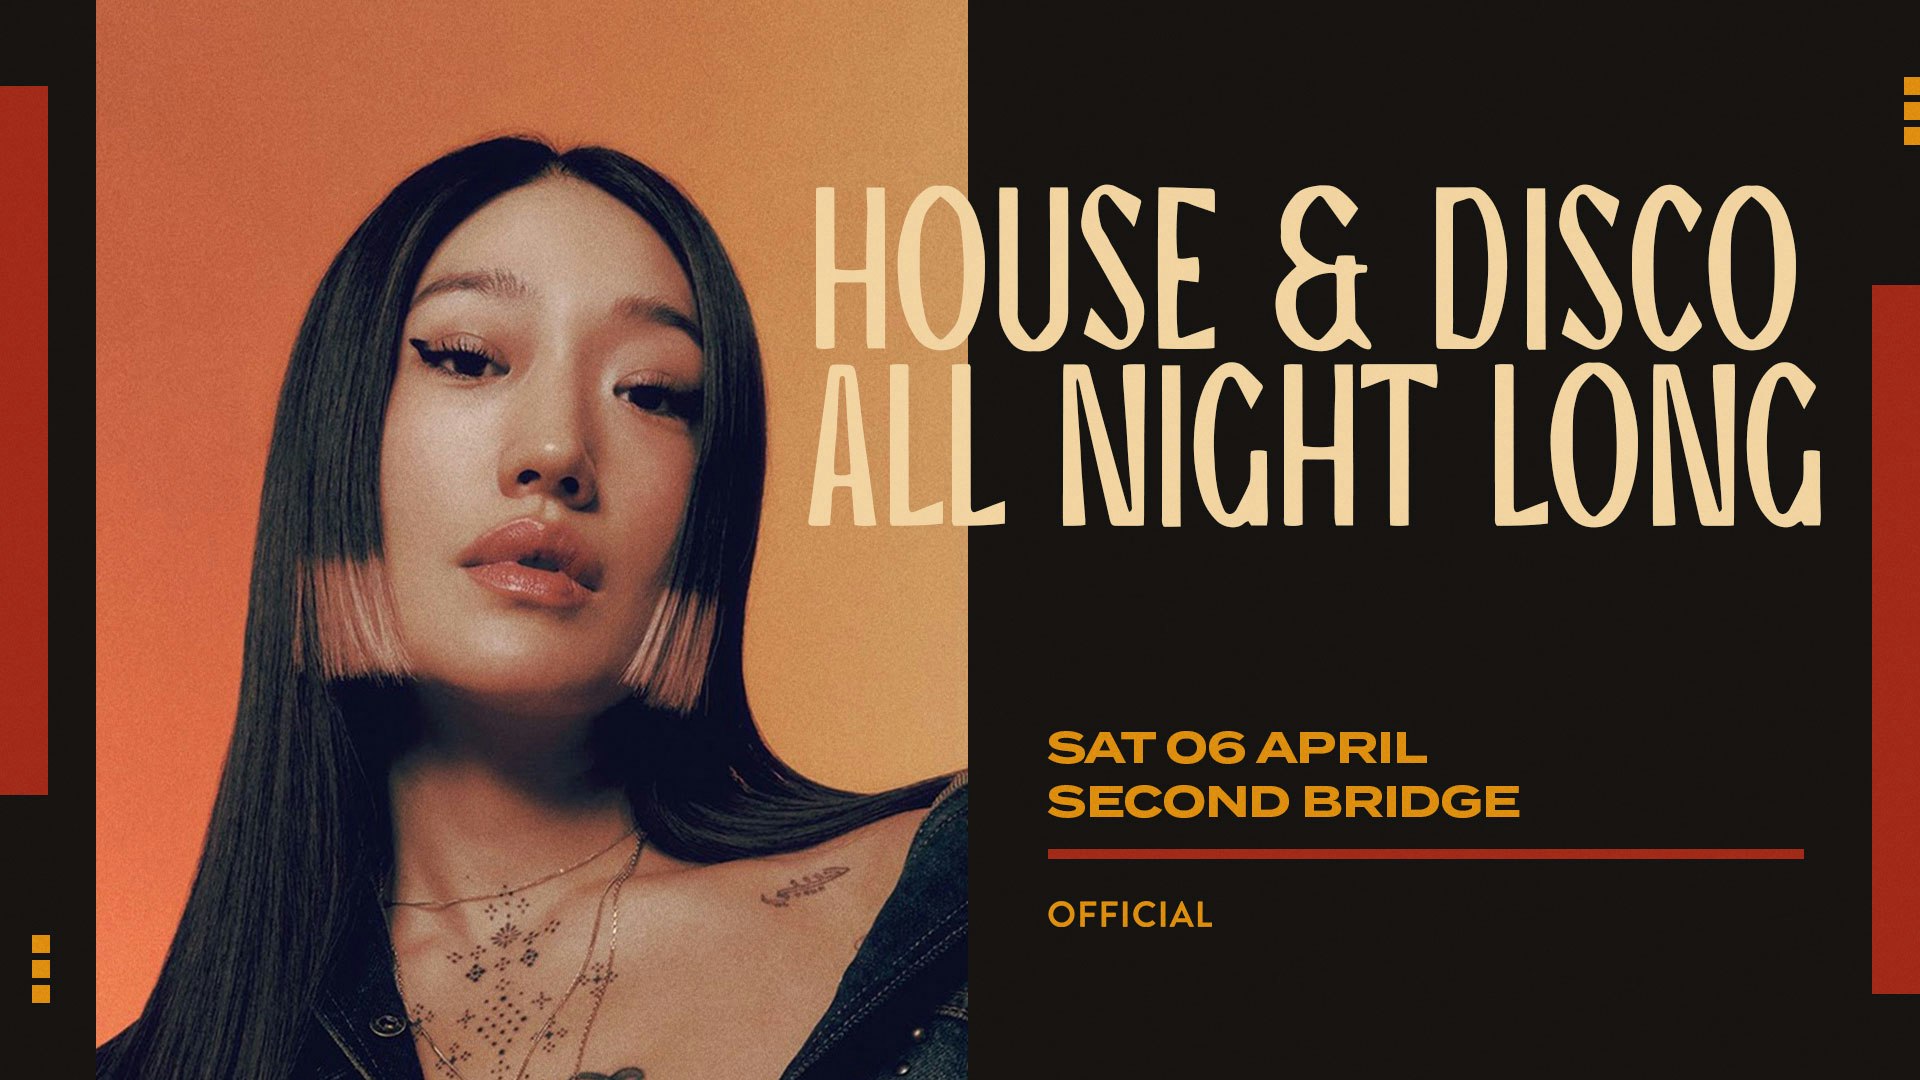 Bridge Saturday: House, Disco, Classics